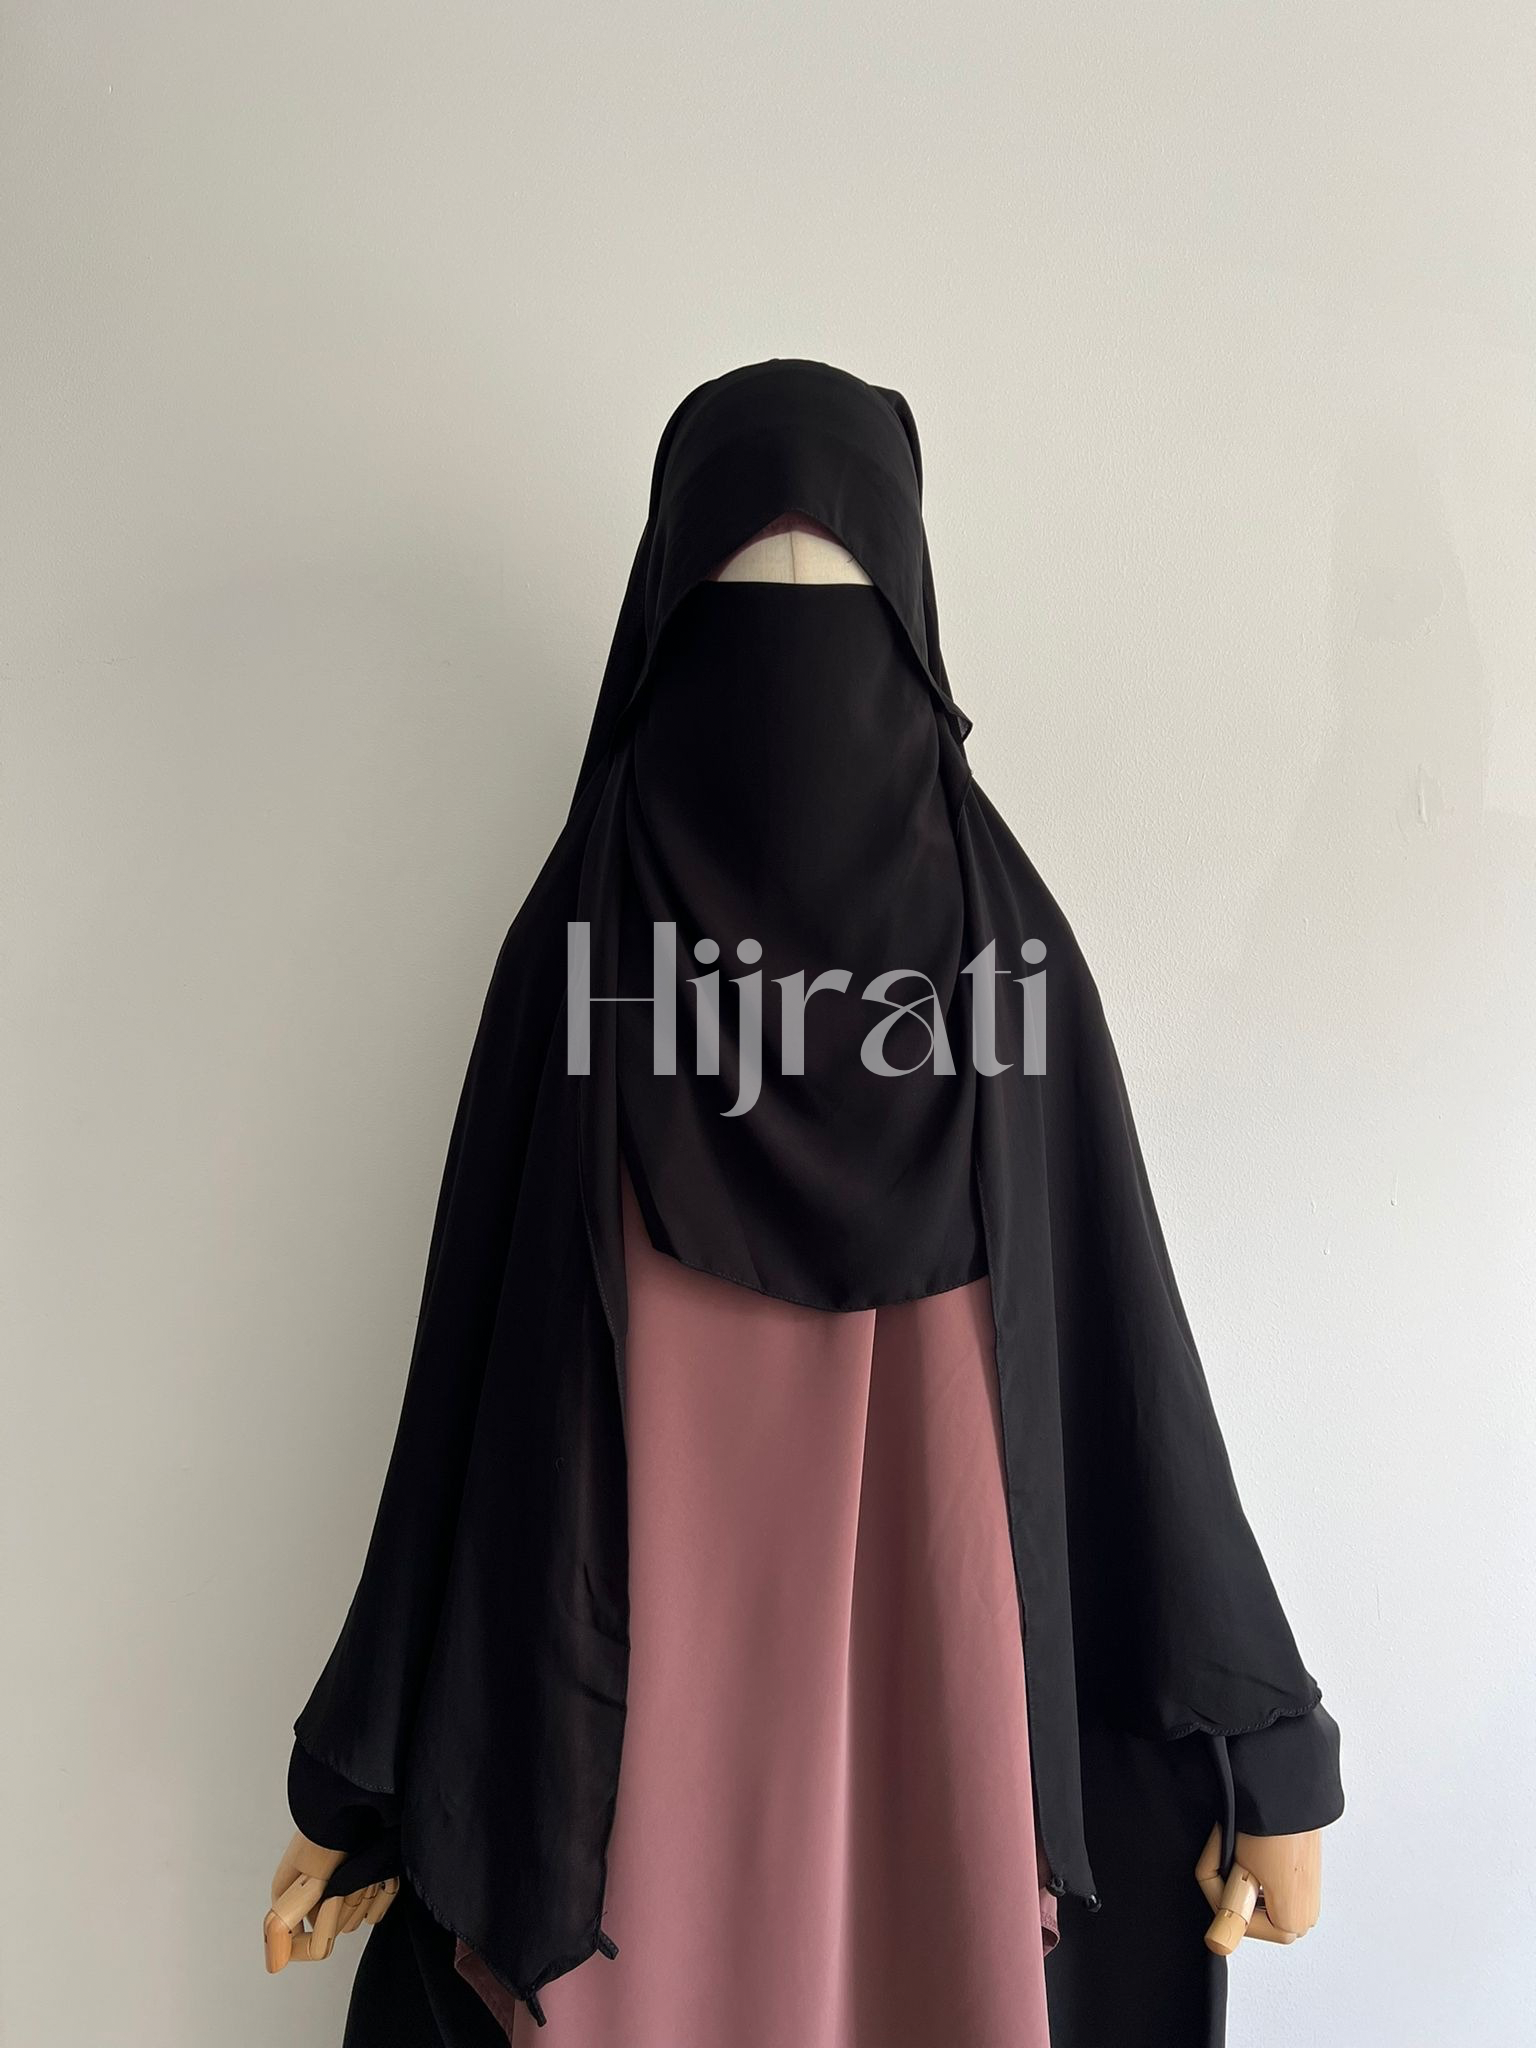 Niqab Pull Down Indonesia Hijraya